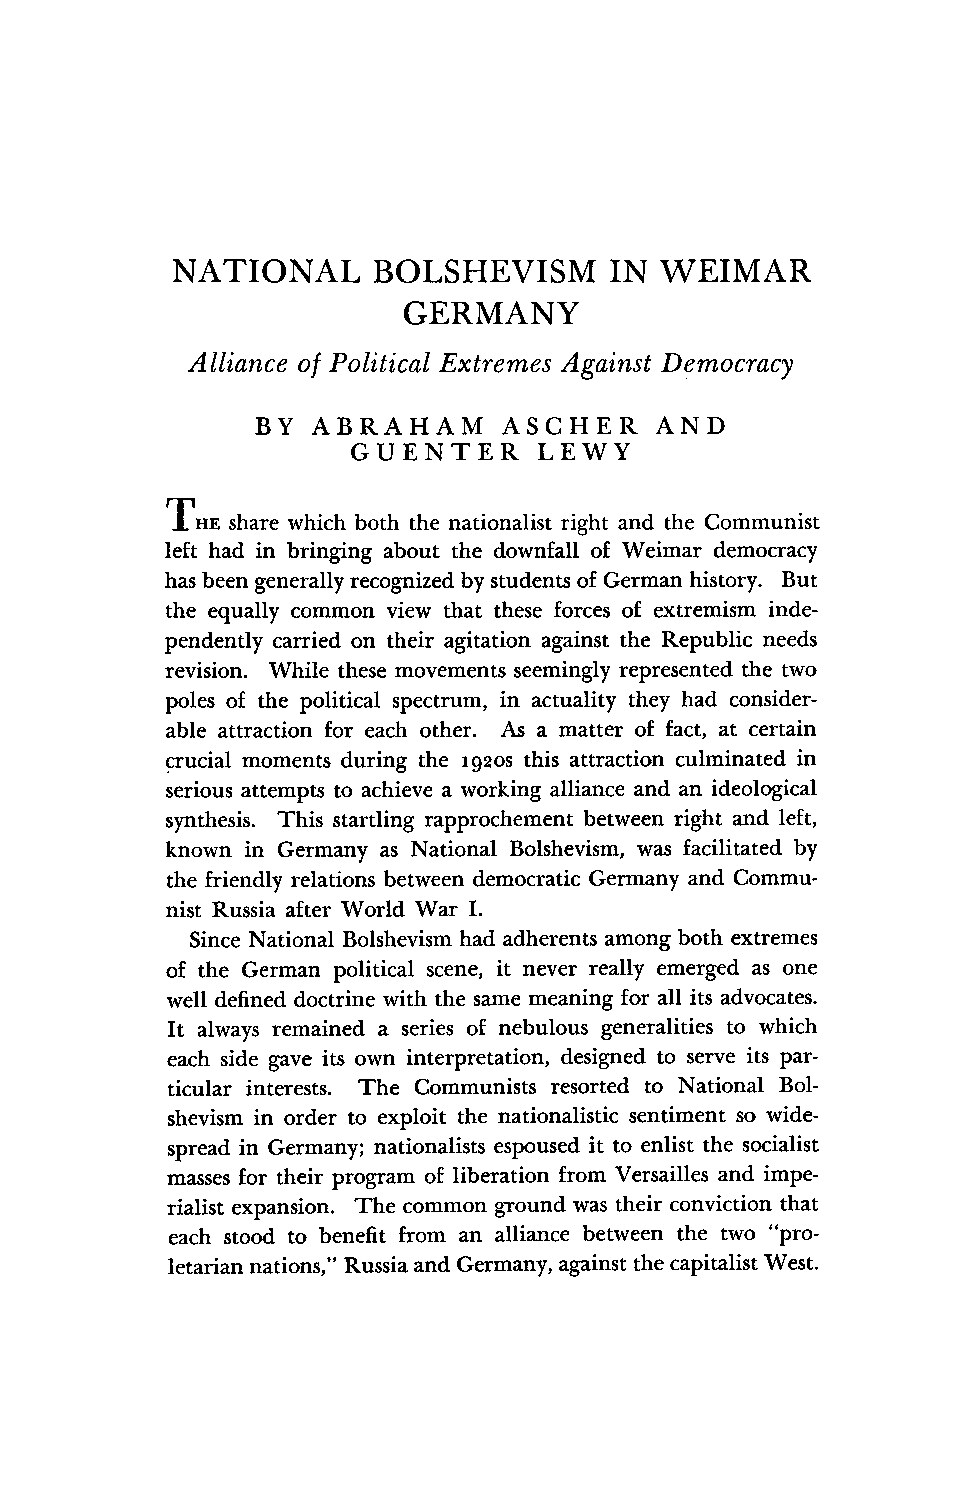 National Bolshevism in Weimar Germany